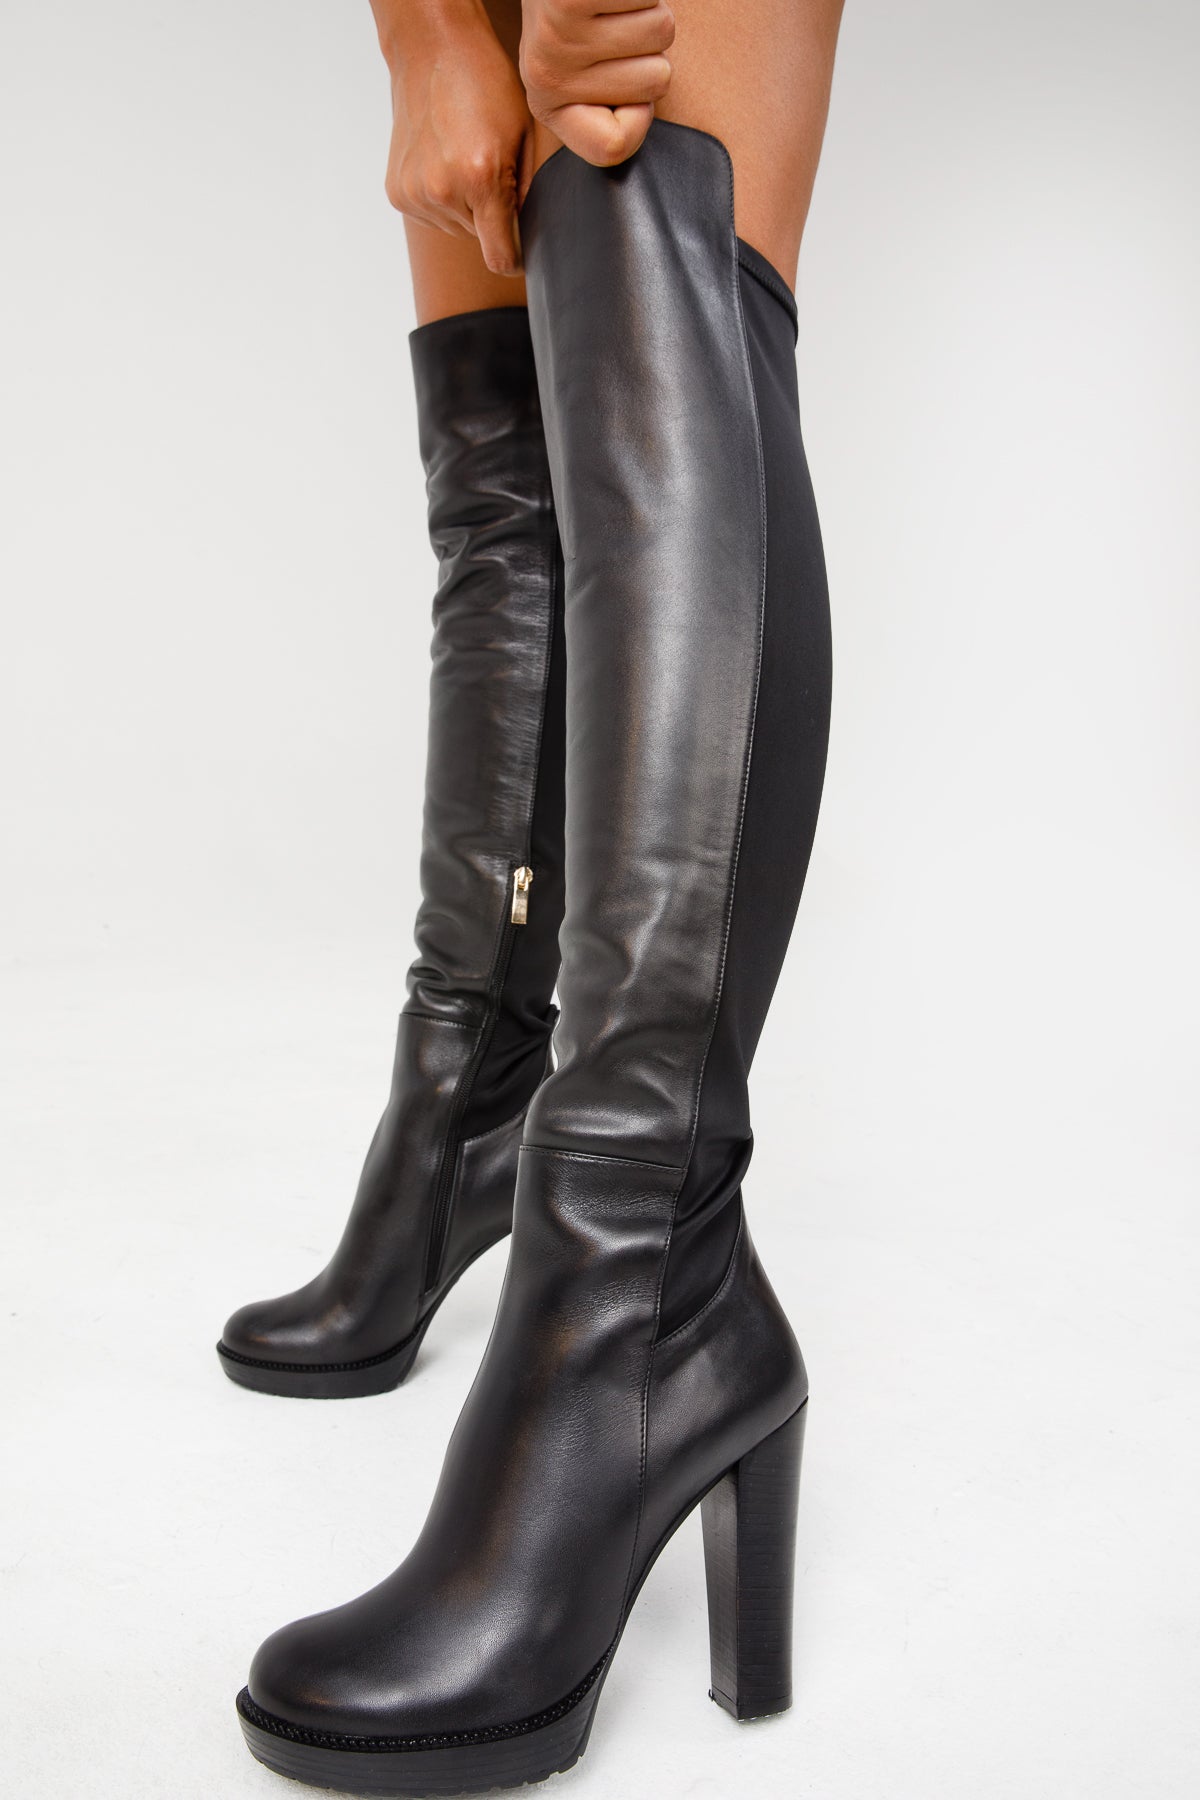 The Sao Paulo Black Leather Knee High Platform Heel Women Boot